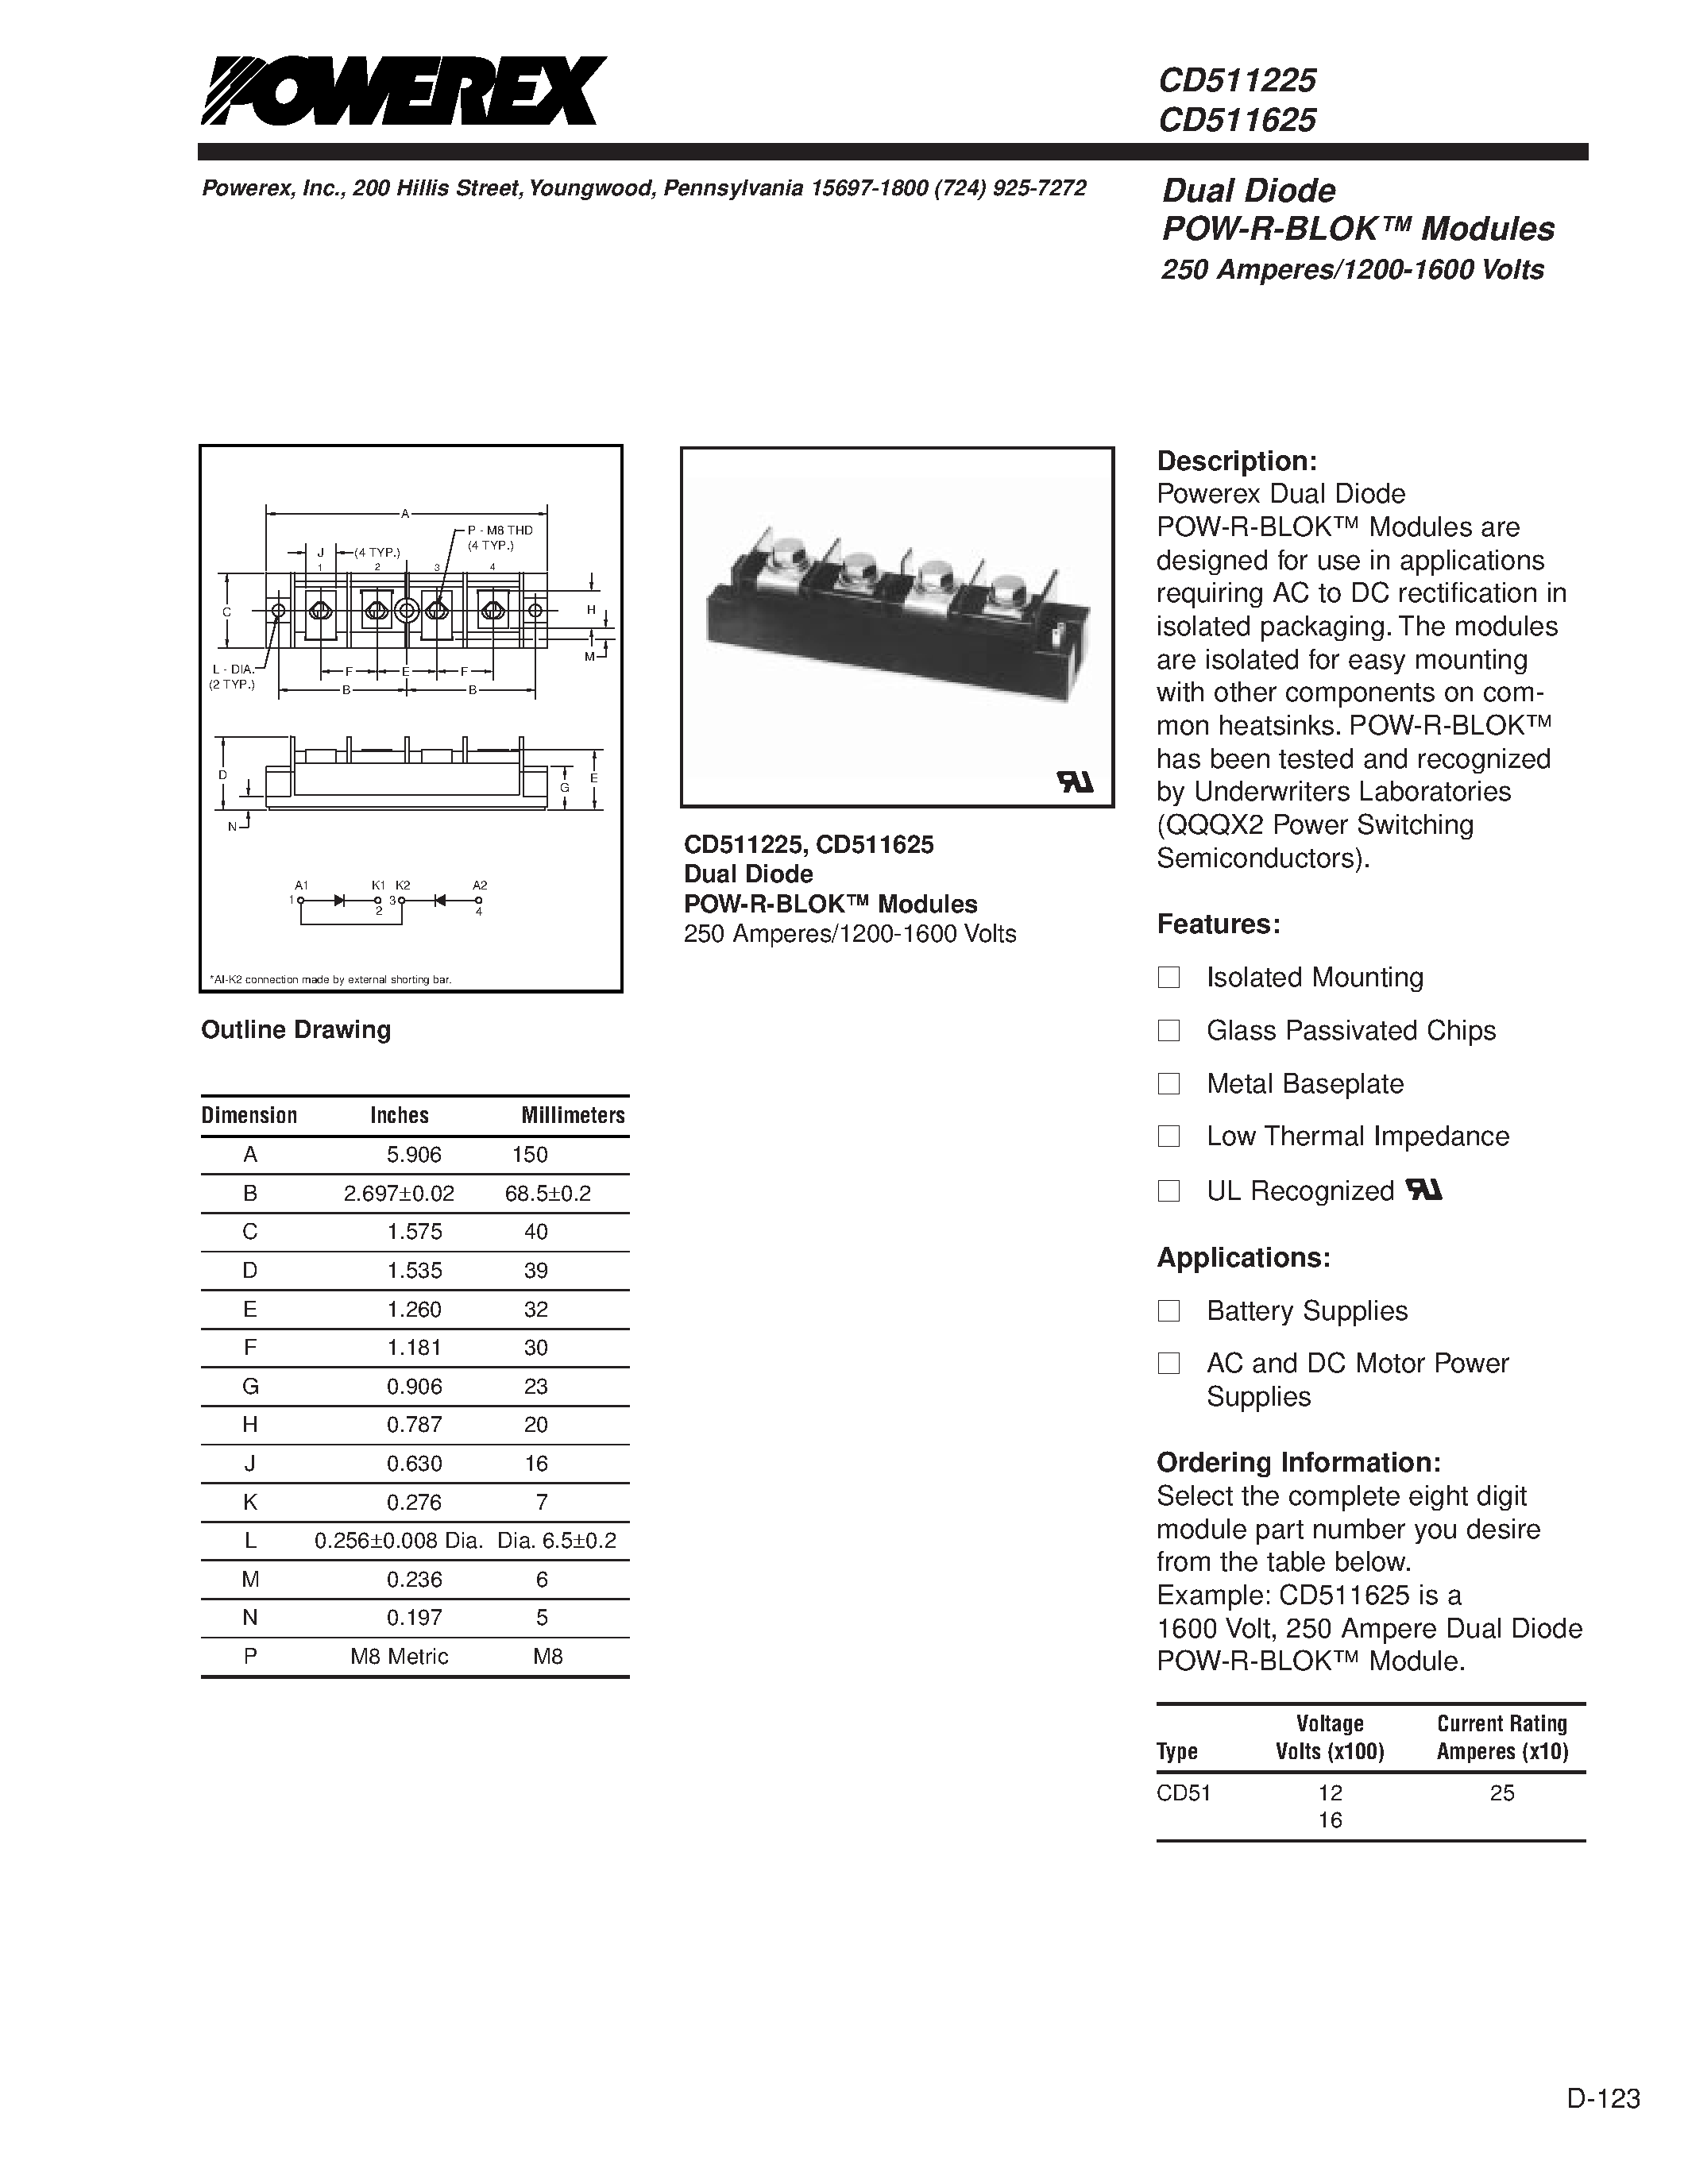 Datasheet CD511625 - Dual Diode POW-R-BLOK Modules 250 Amperes/1200-1600 Volts page 1